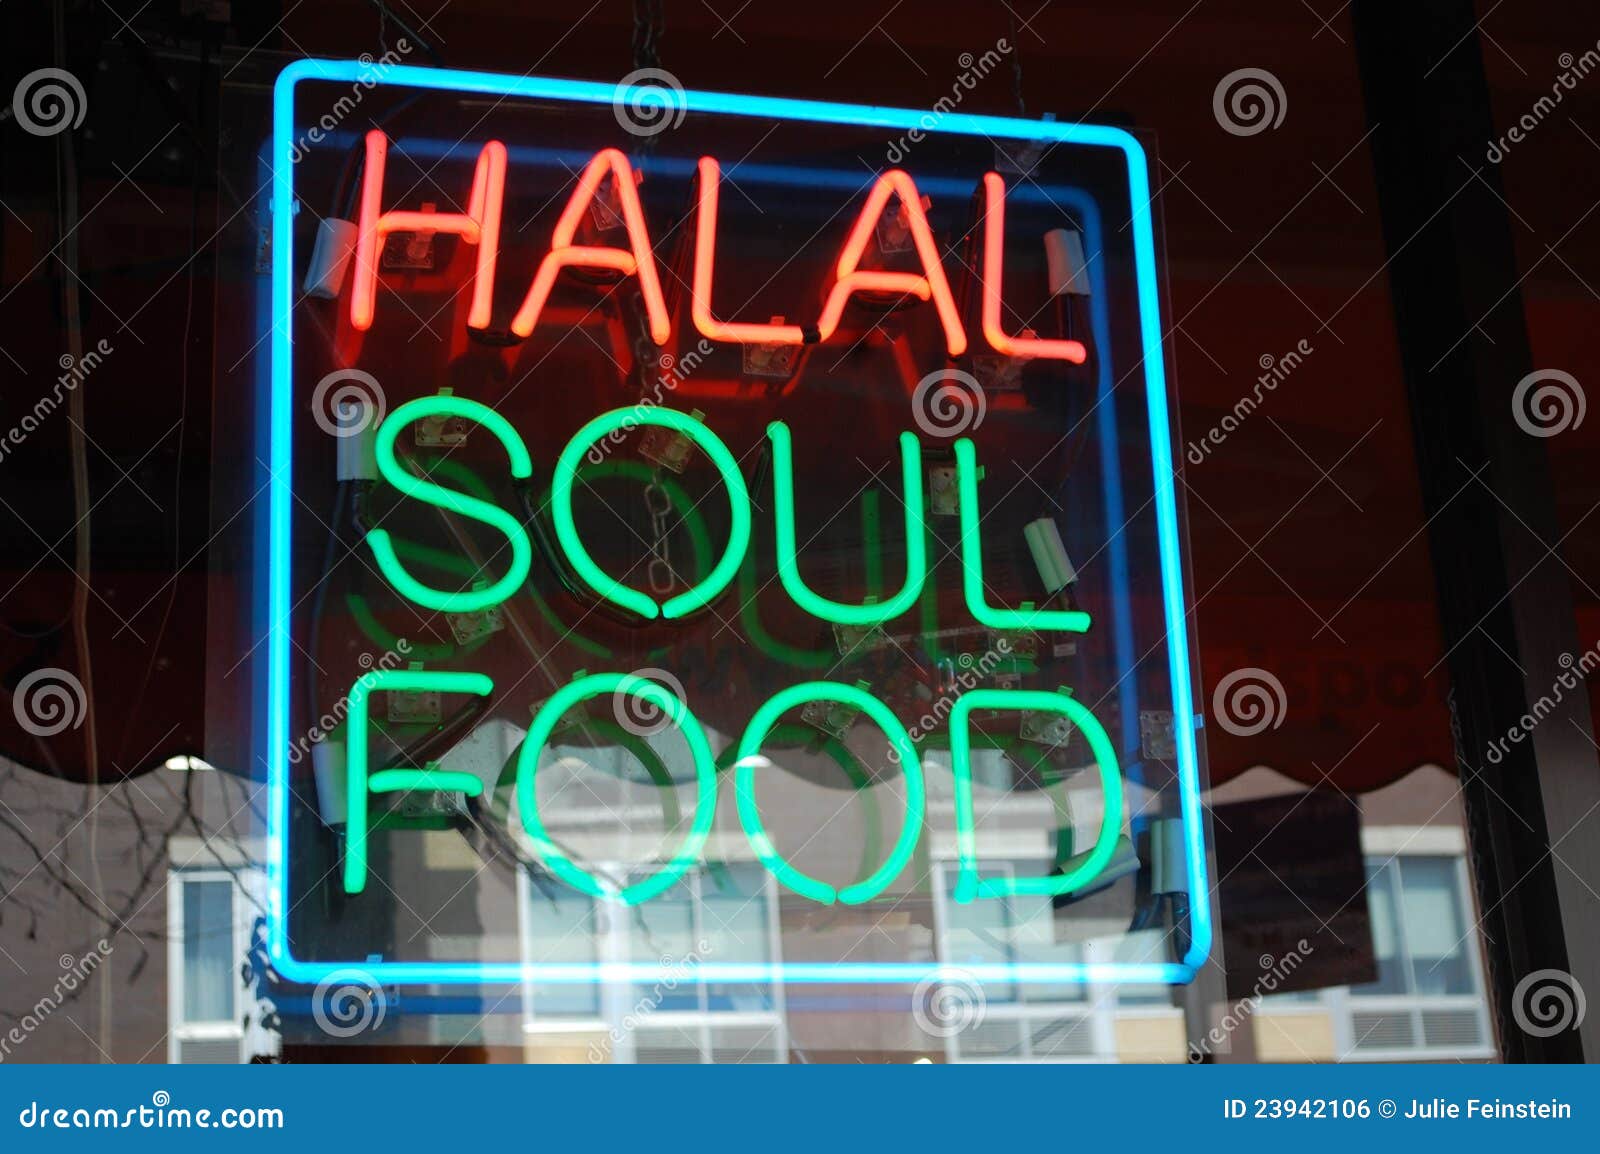 halal soul food neon